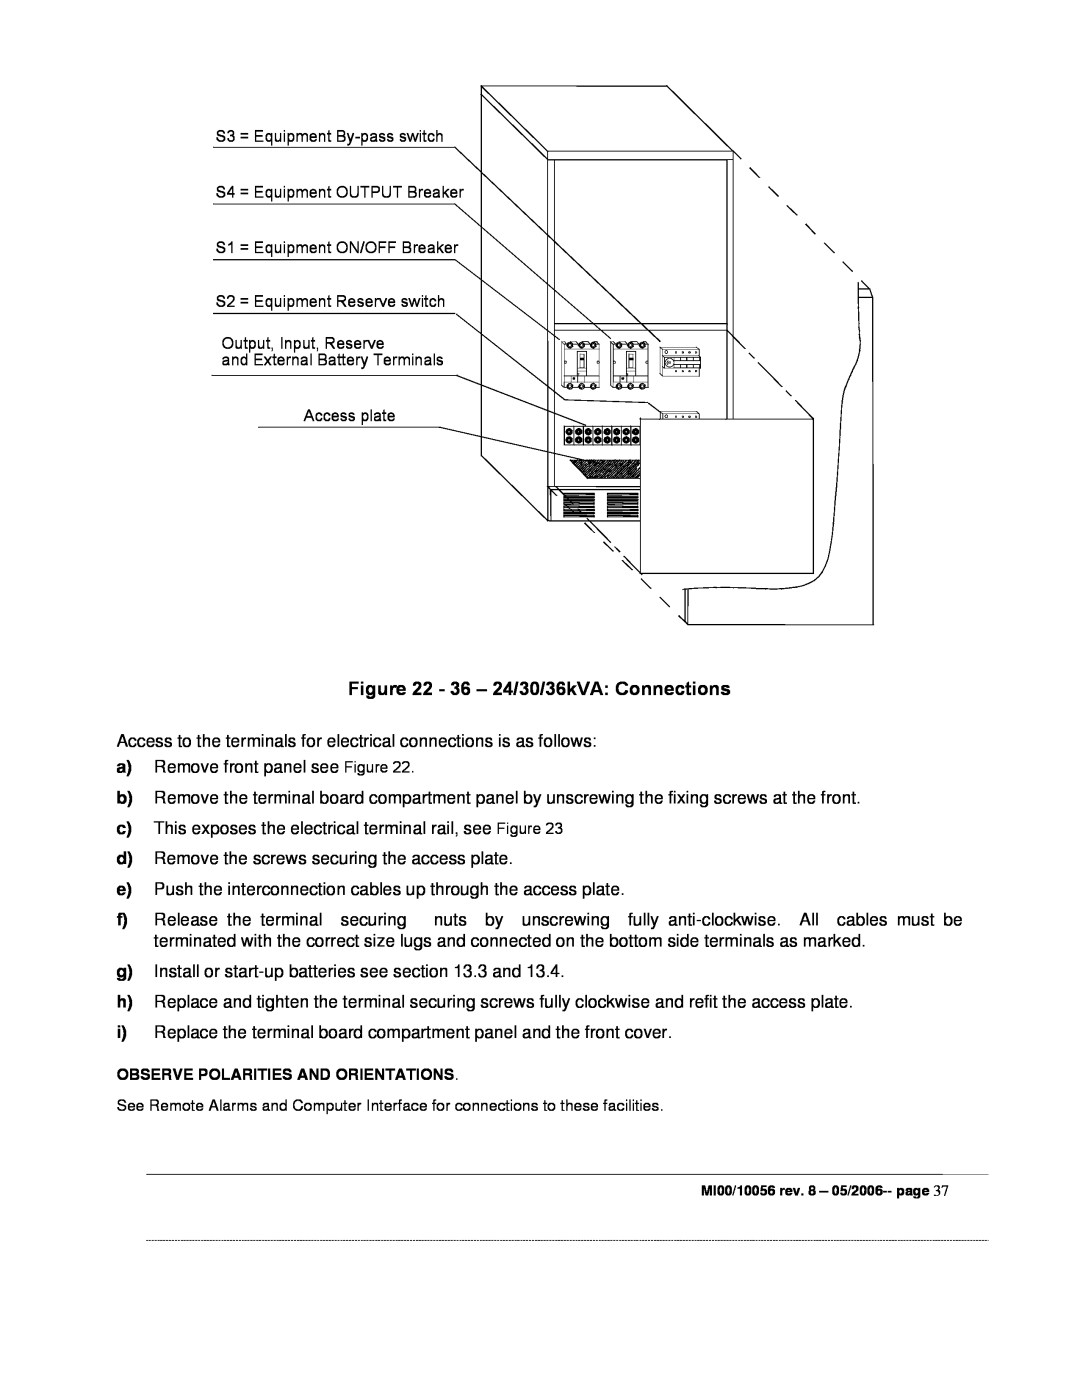 Garmin EDP70 manual 36 - 24/30/36kVA Connections 